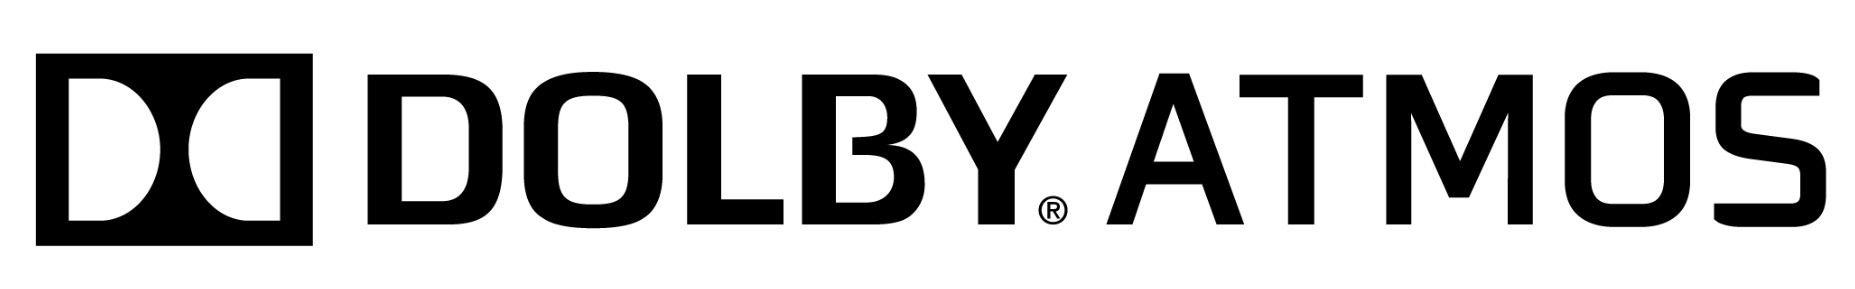 Dolby Atmos Logo - Dolby atmos Logos